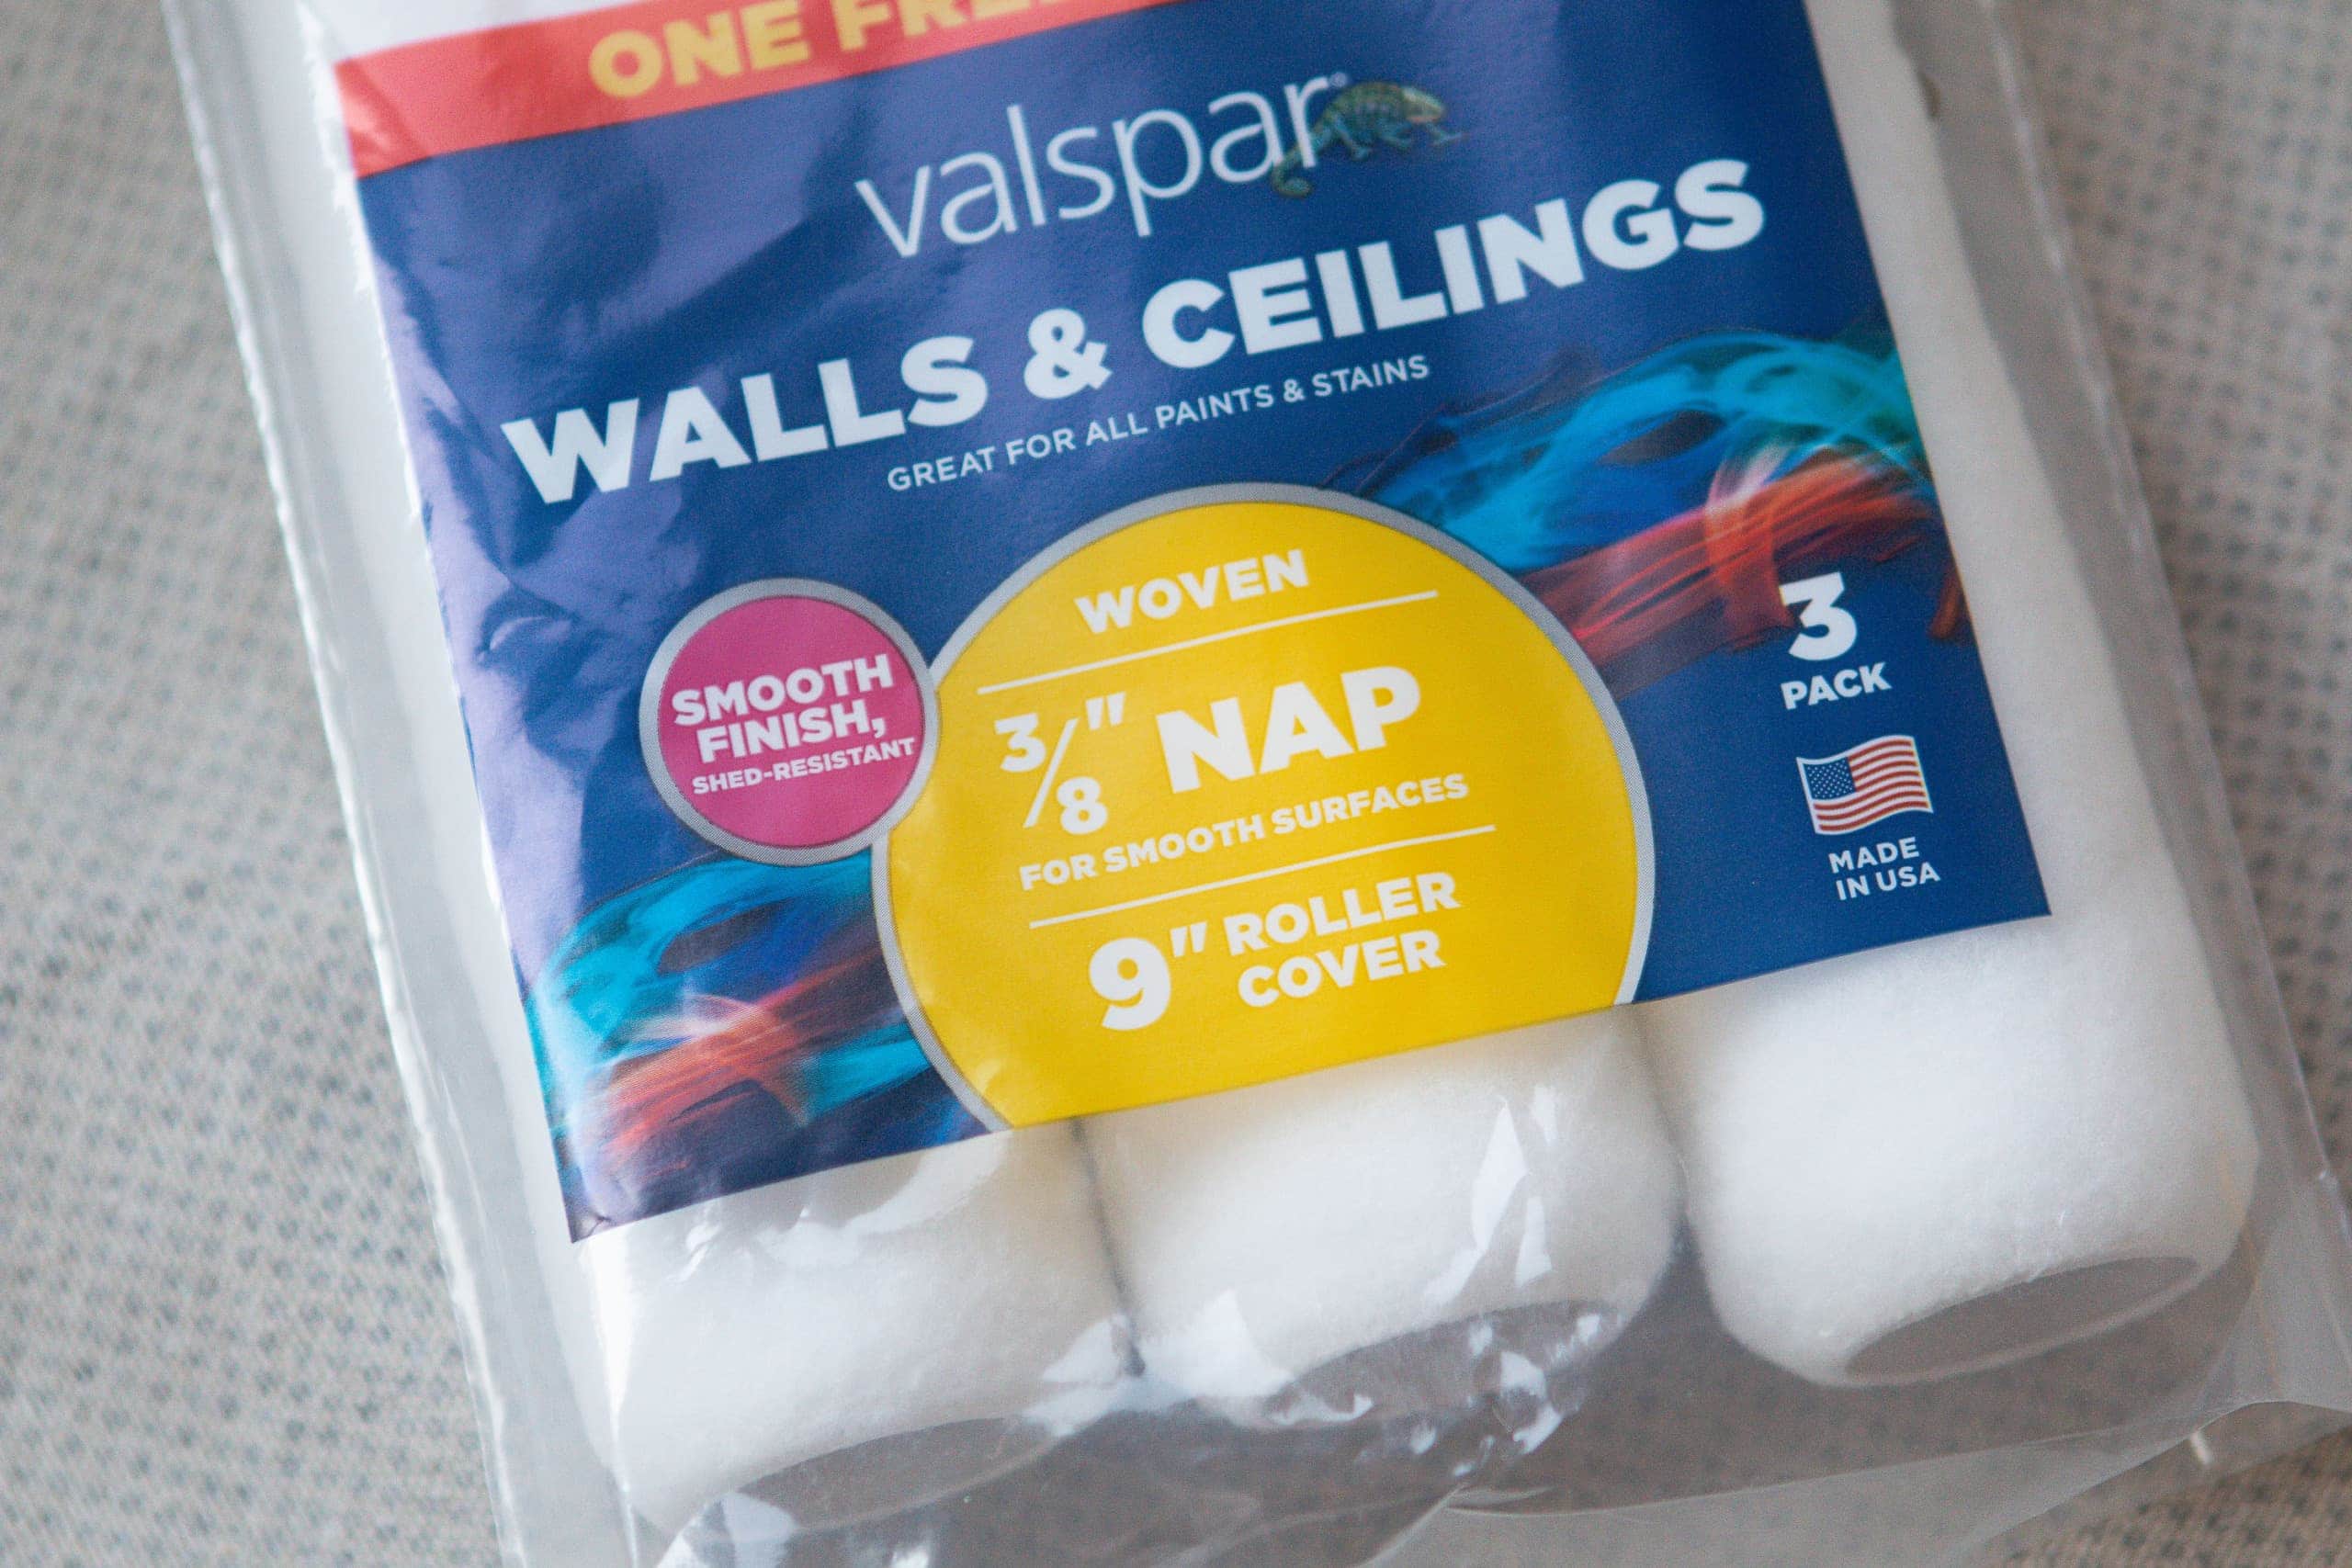 3/8" nap for walls 